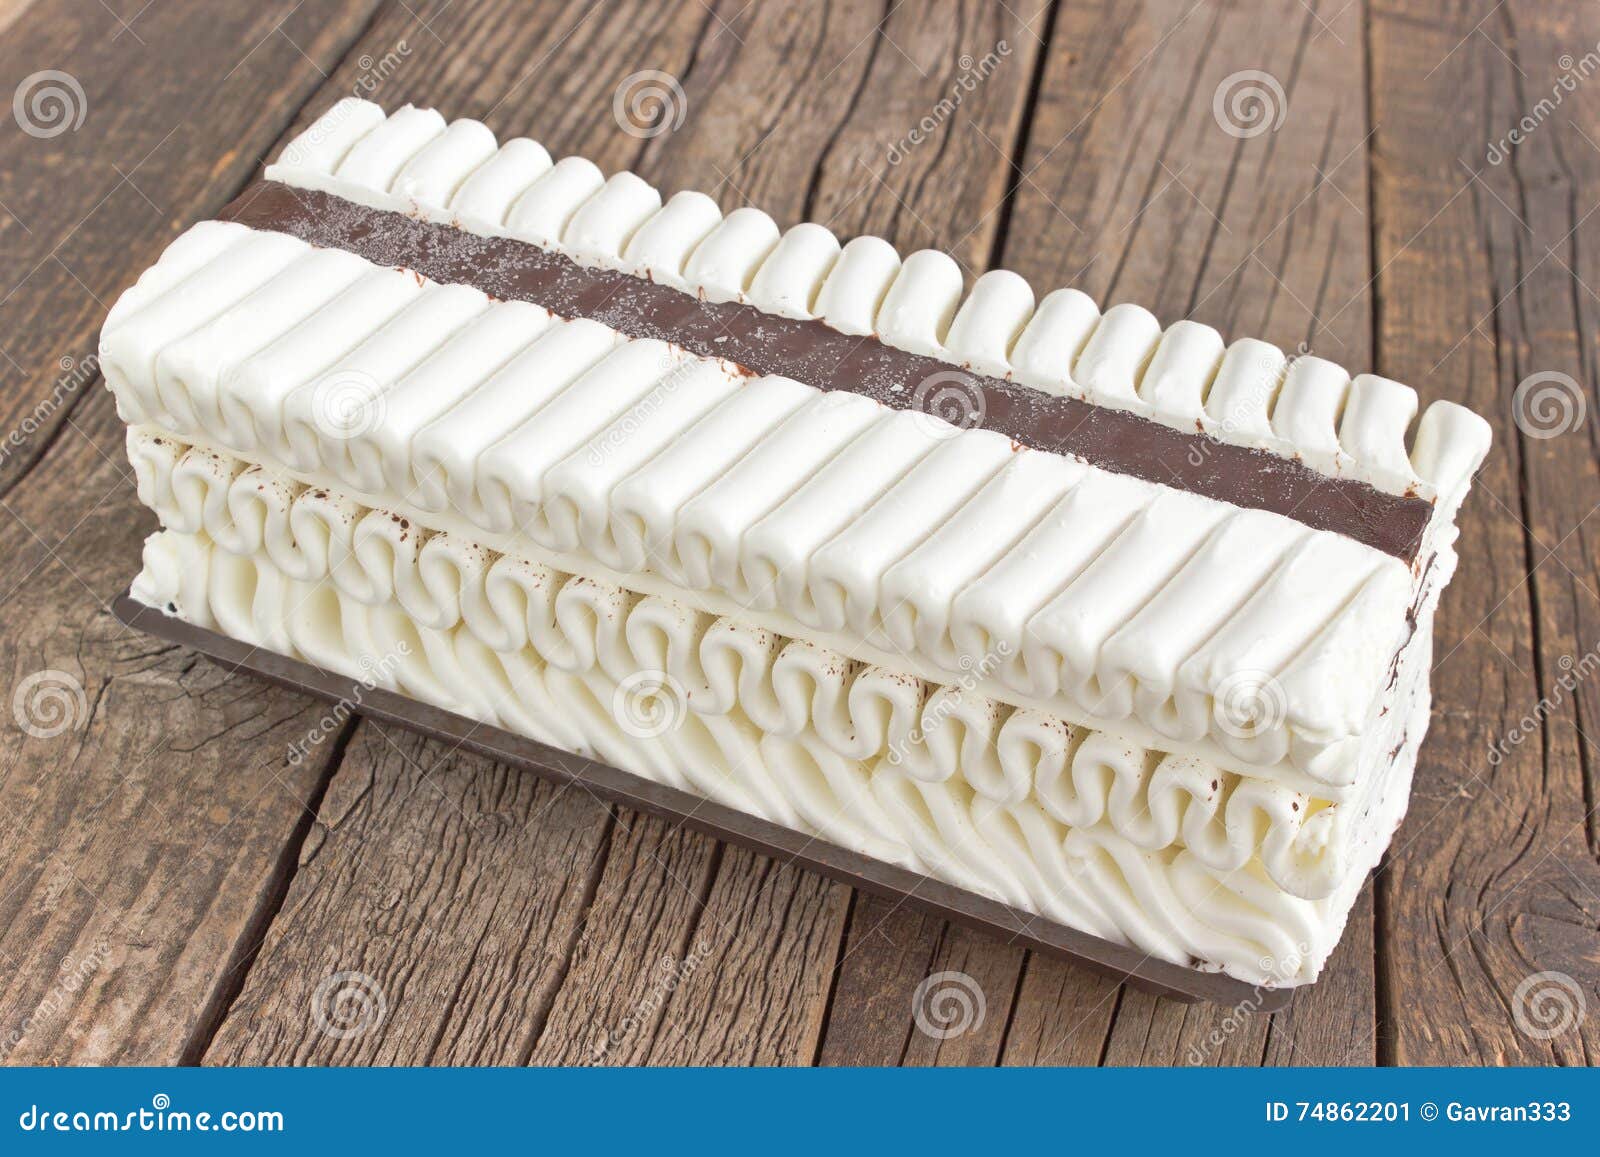 Ice Cream Cake Stock Image. Image Of Food, Cream, White - 74862201